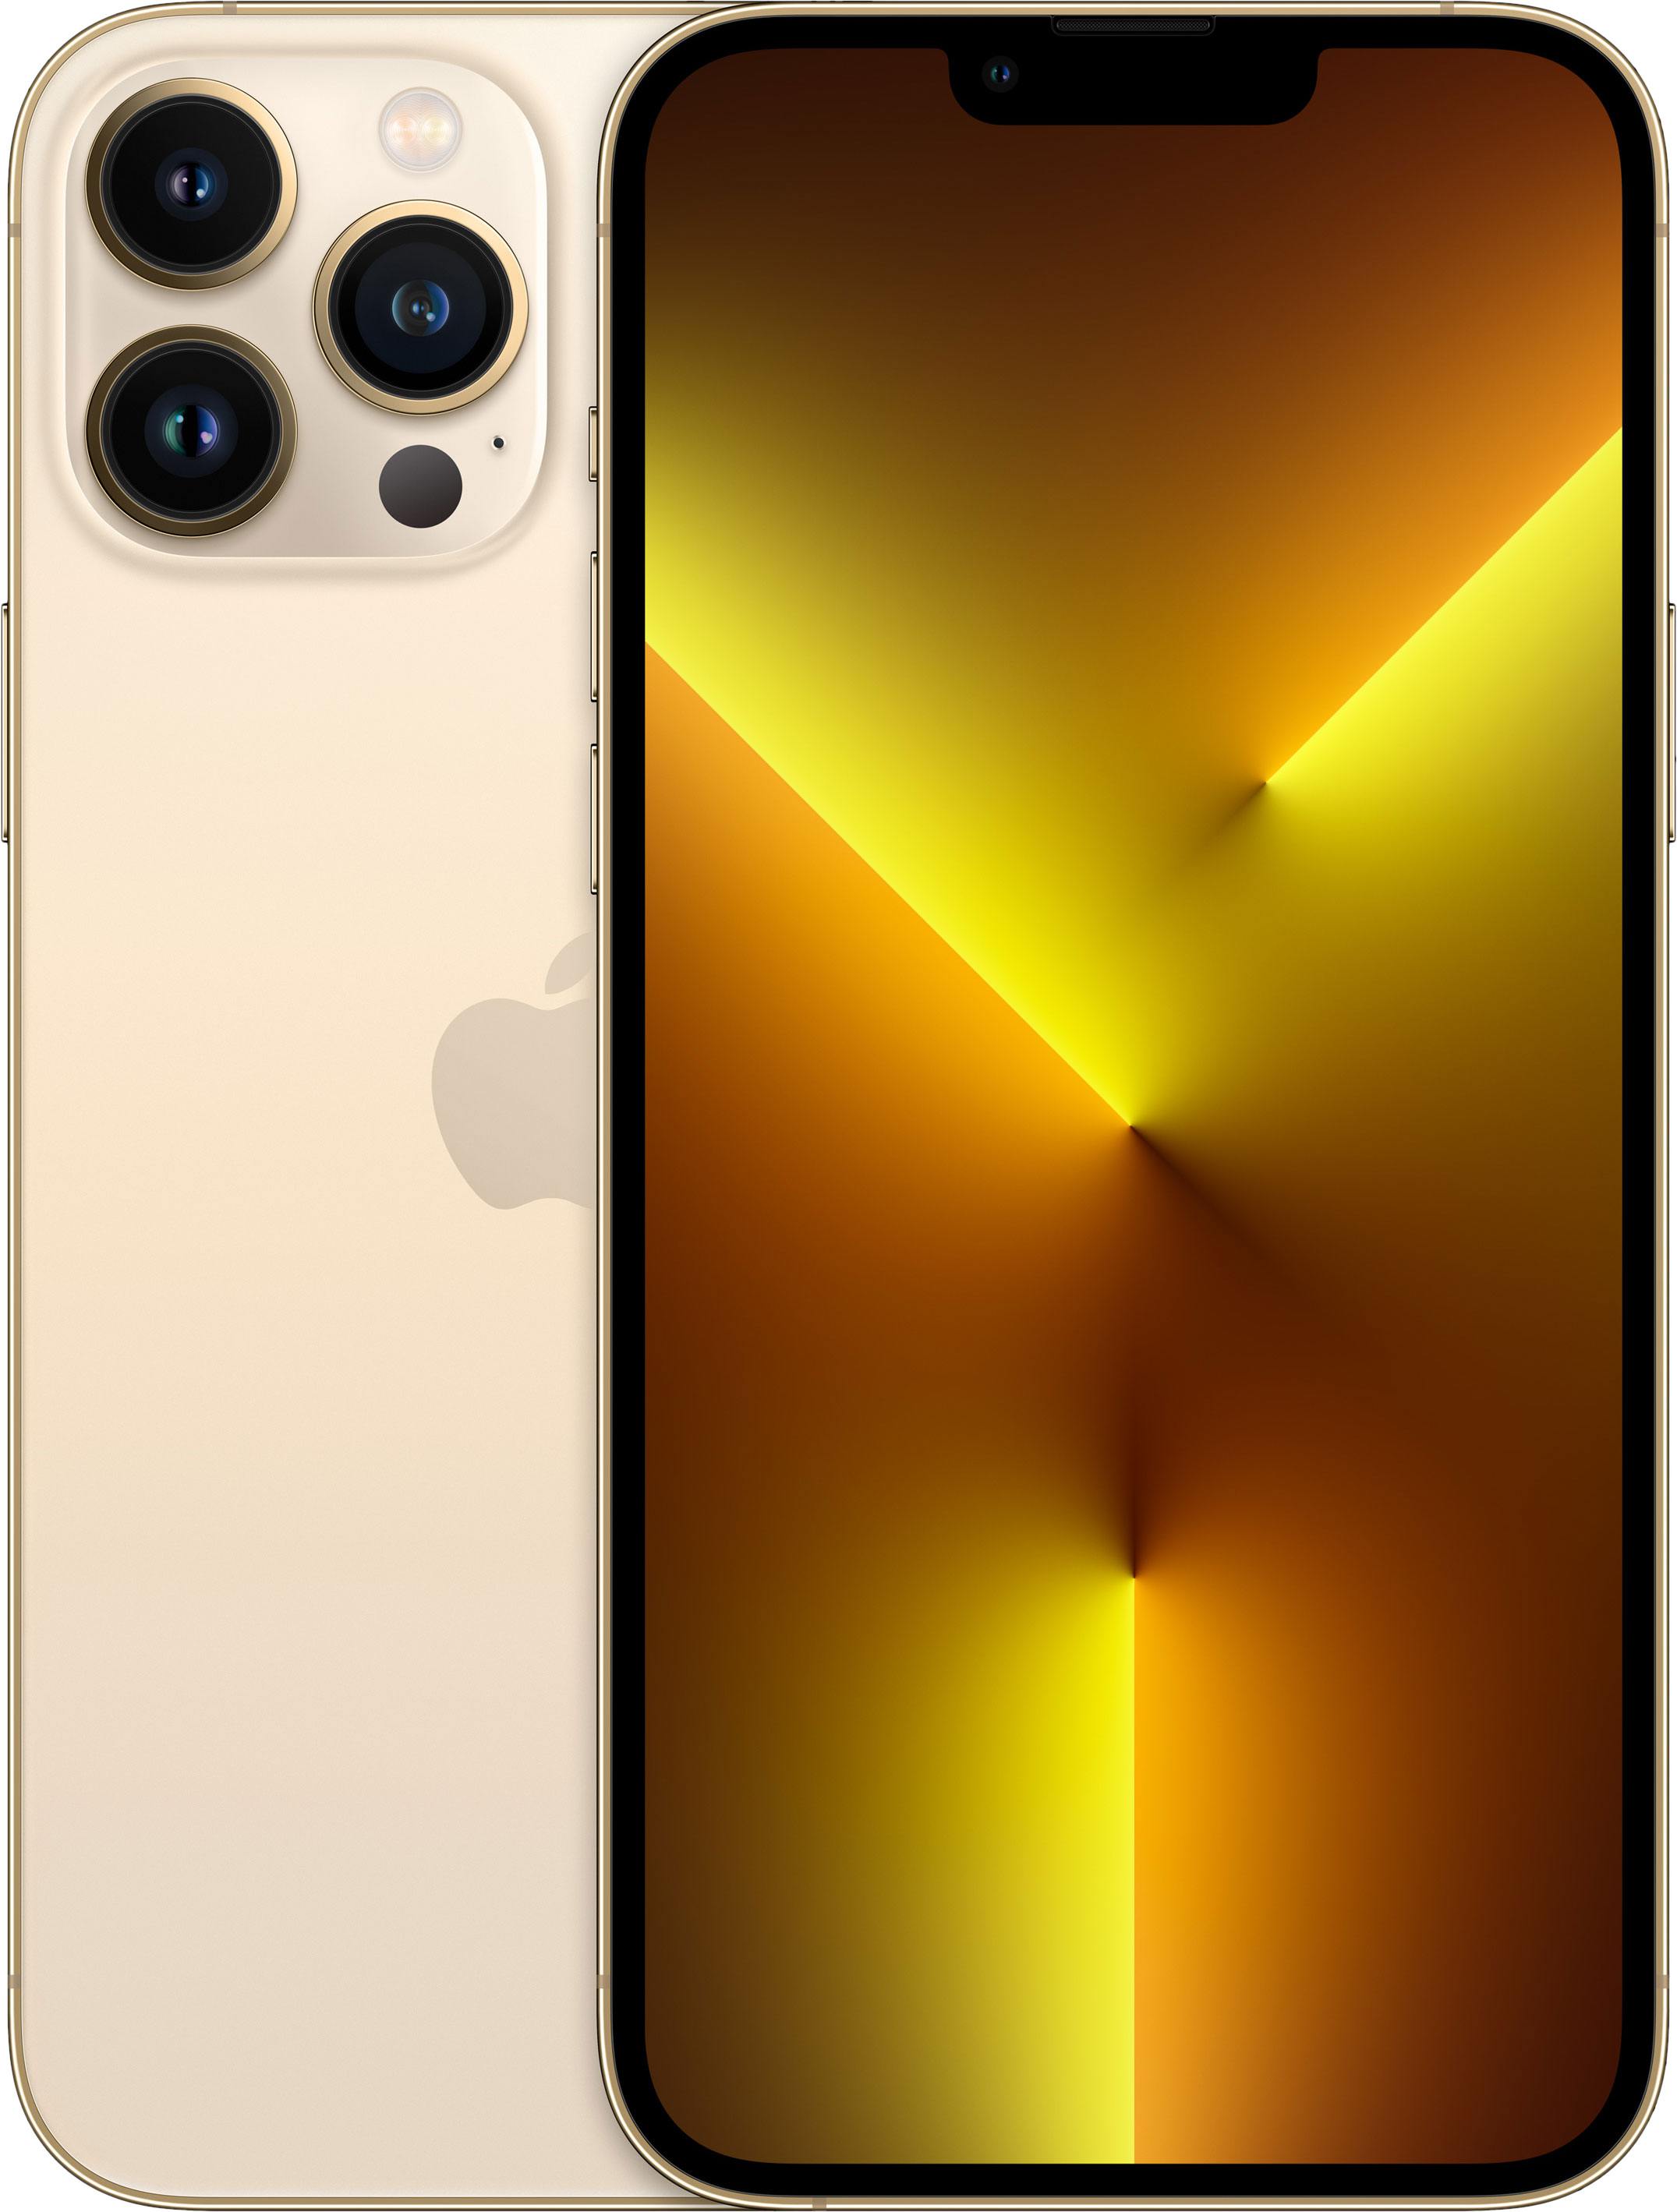 iPhone 13 Pro Max 512Gb Gold